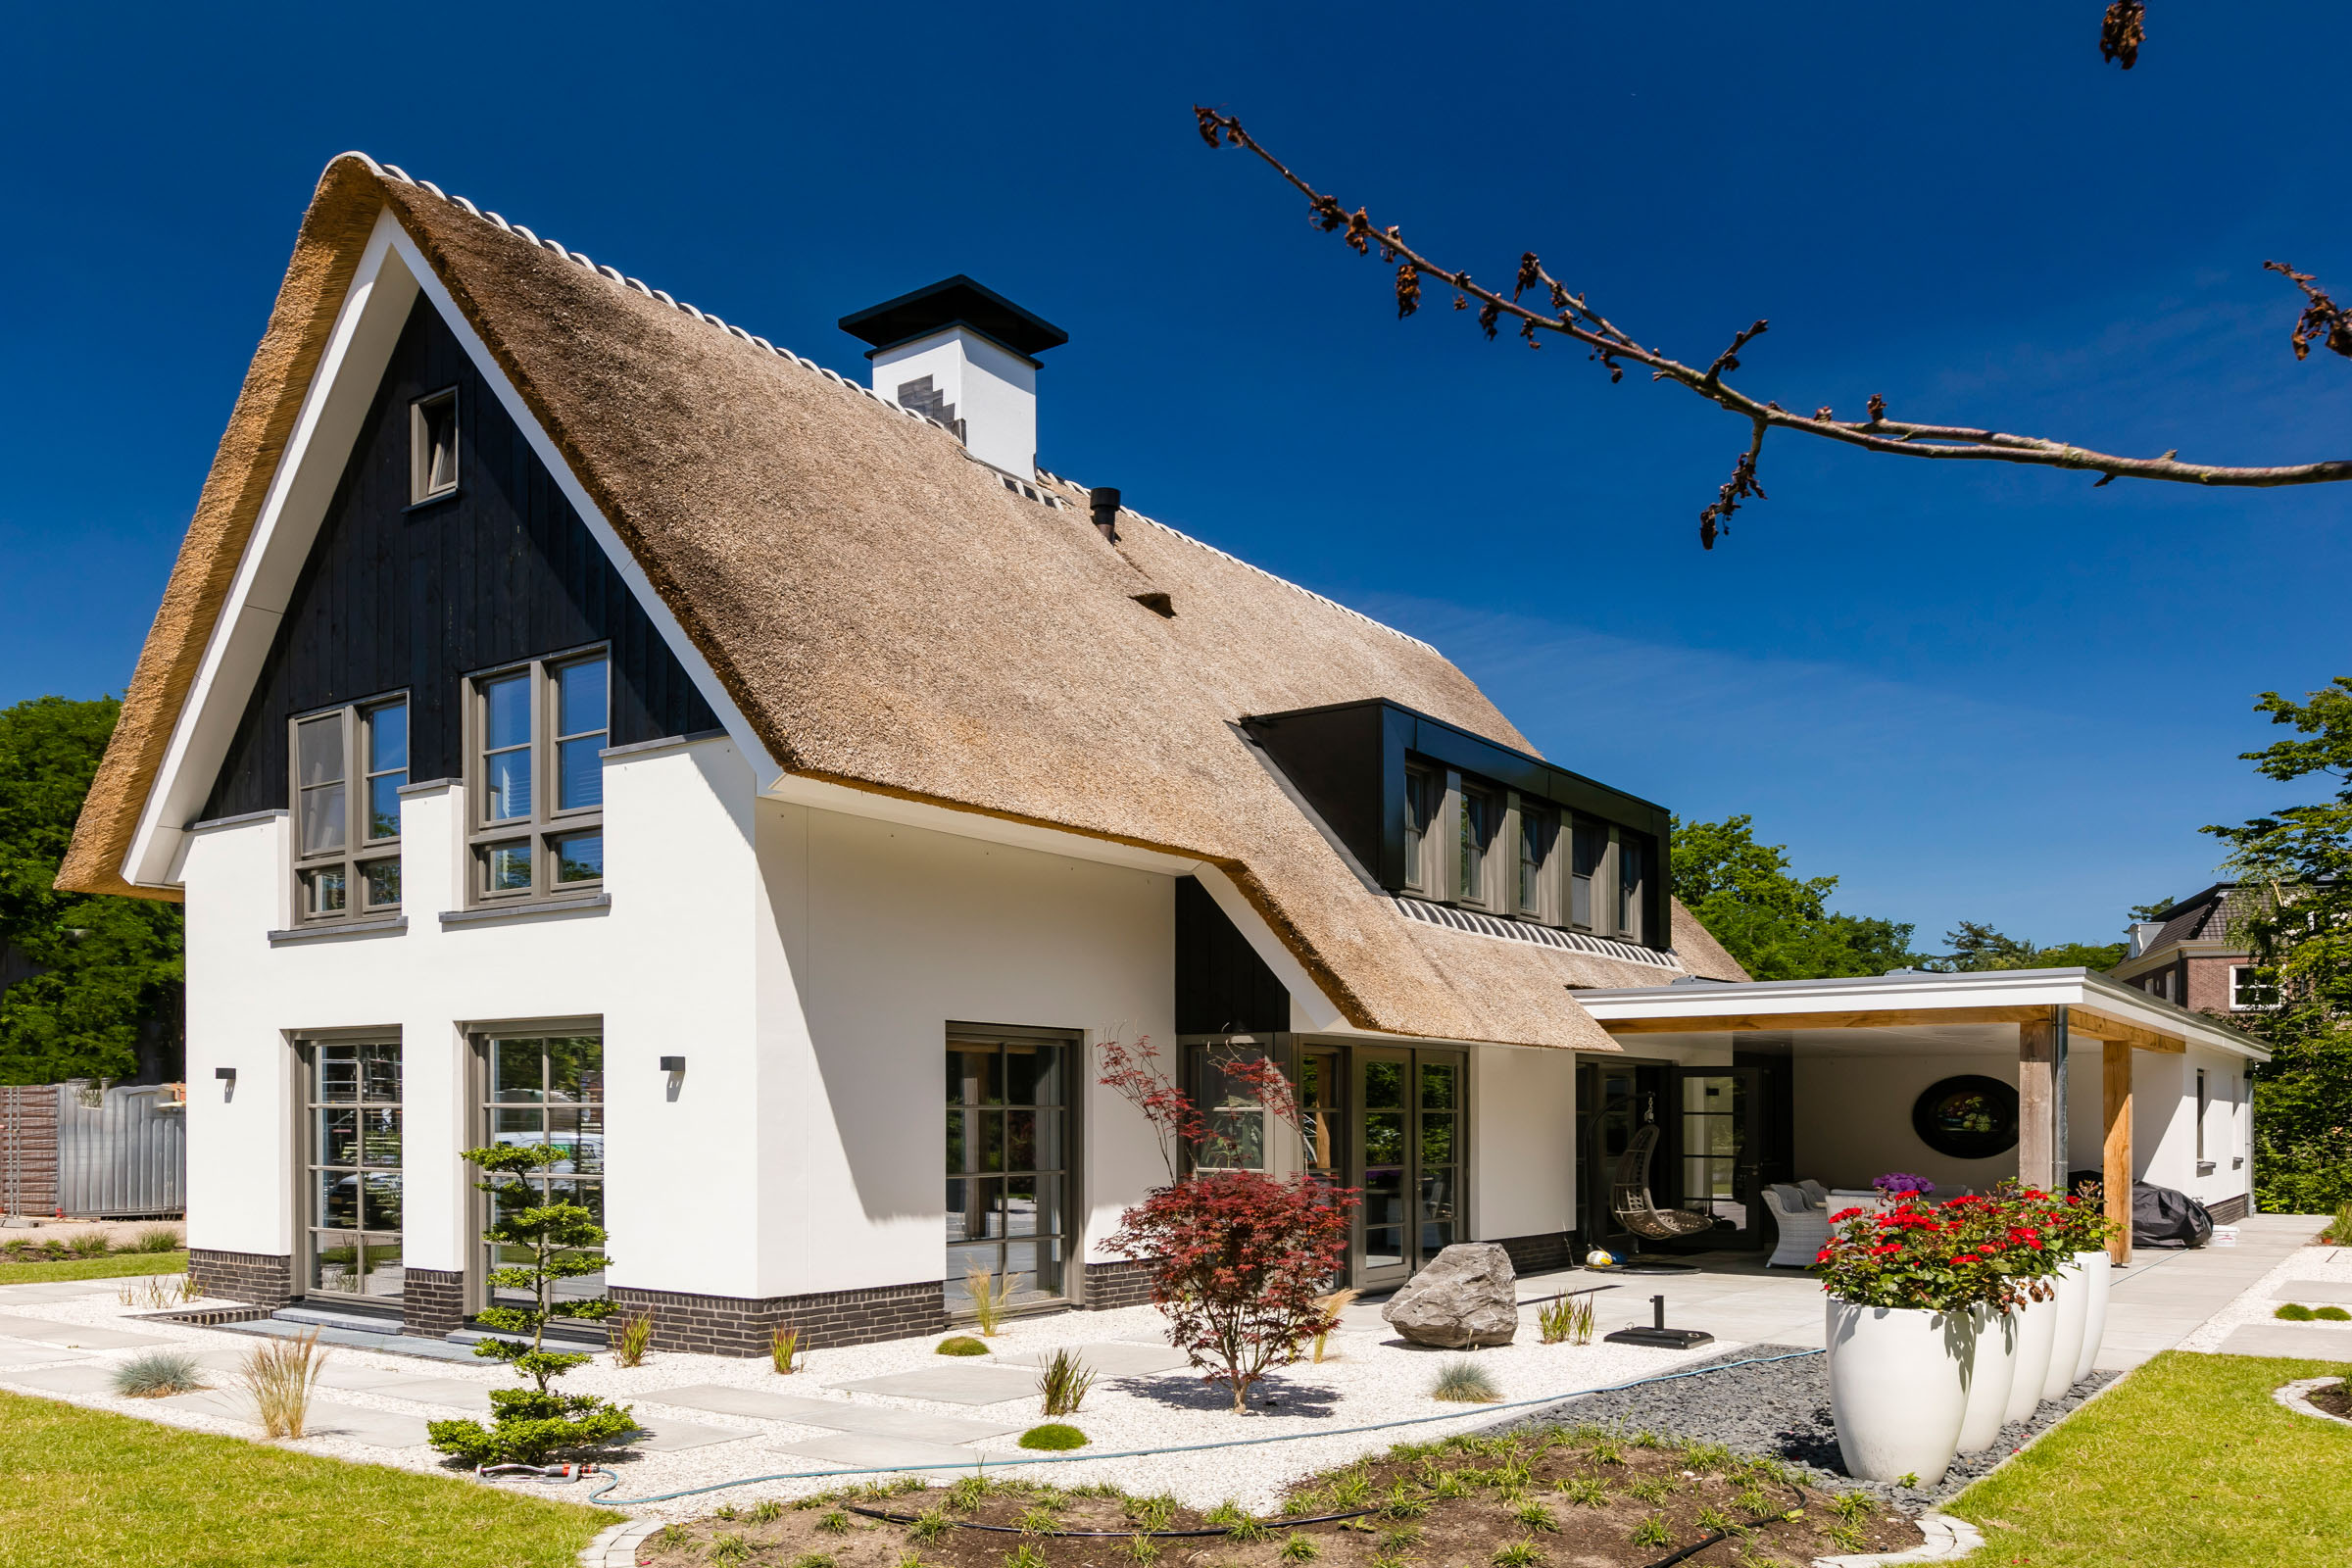 Foto: Pannendak versus Rieten dak  een rietgedekte villa bouwen